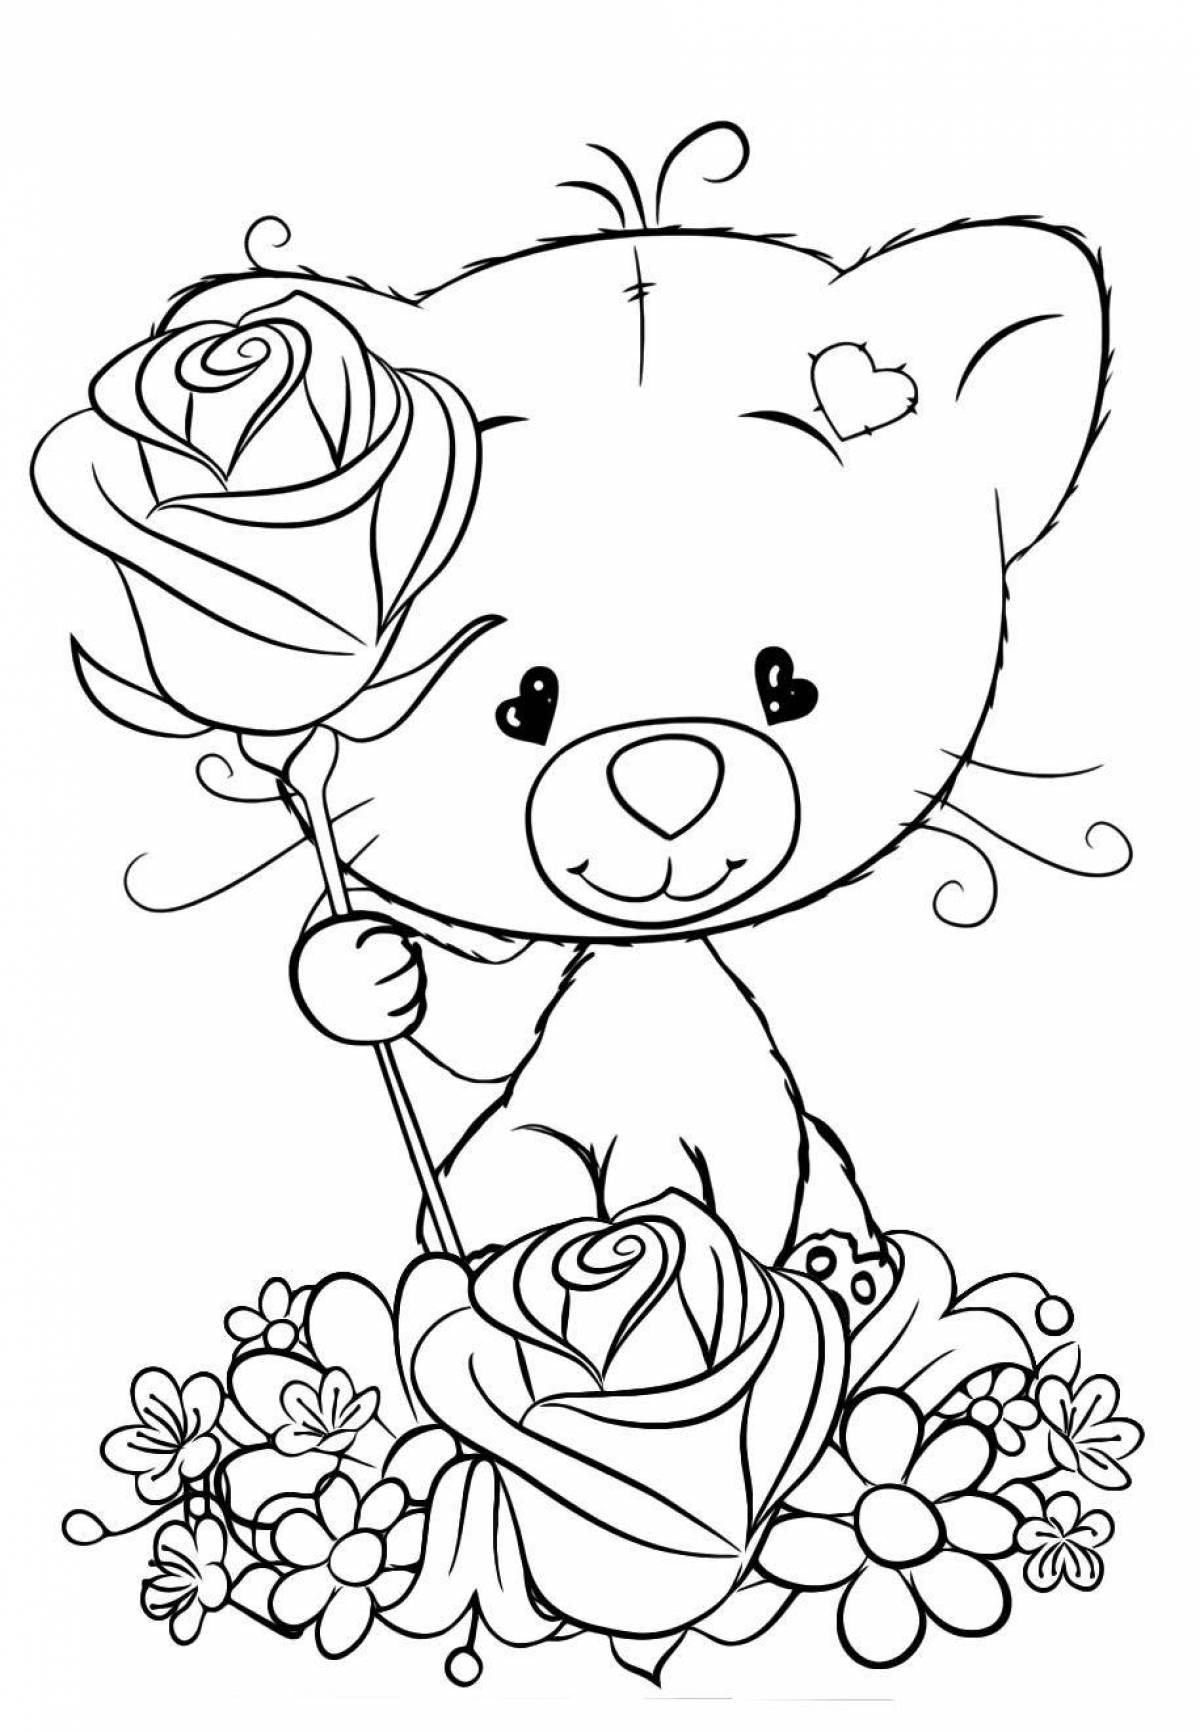 Jolly bear with flowers